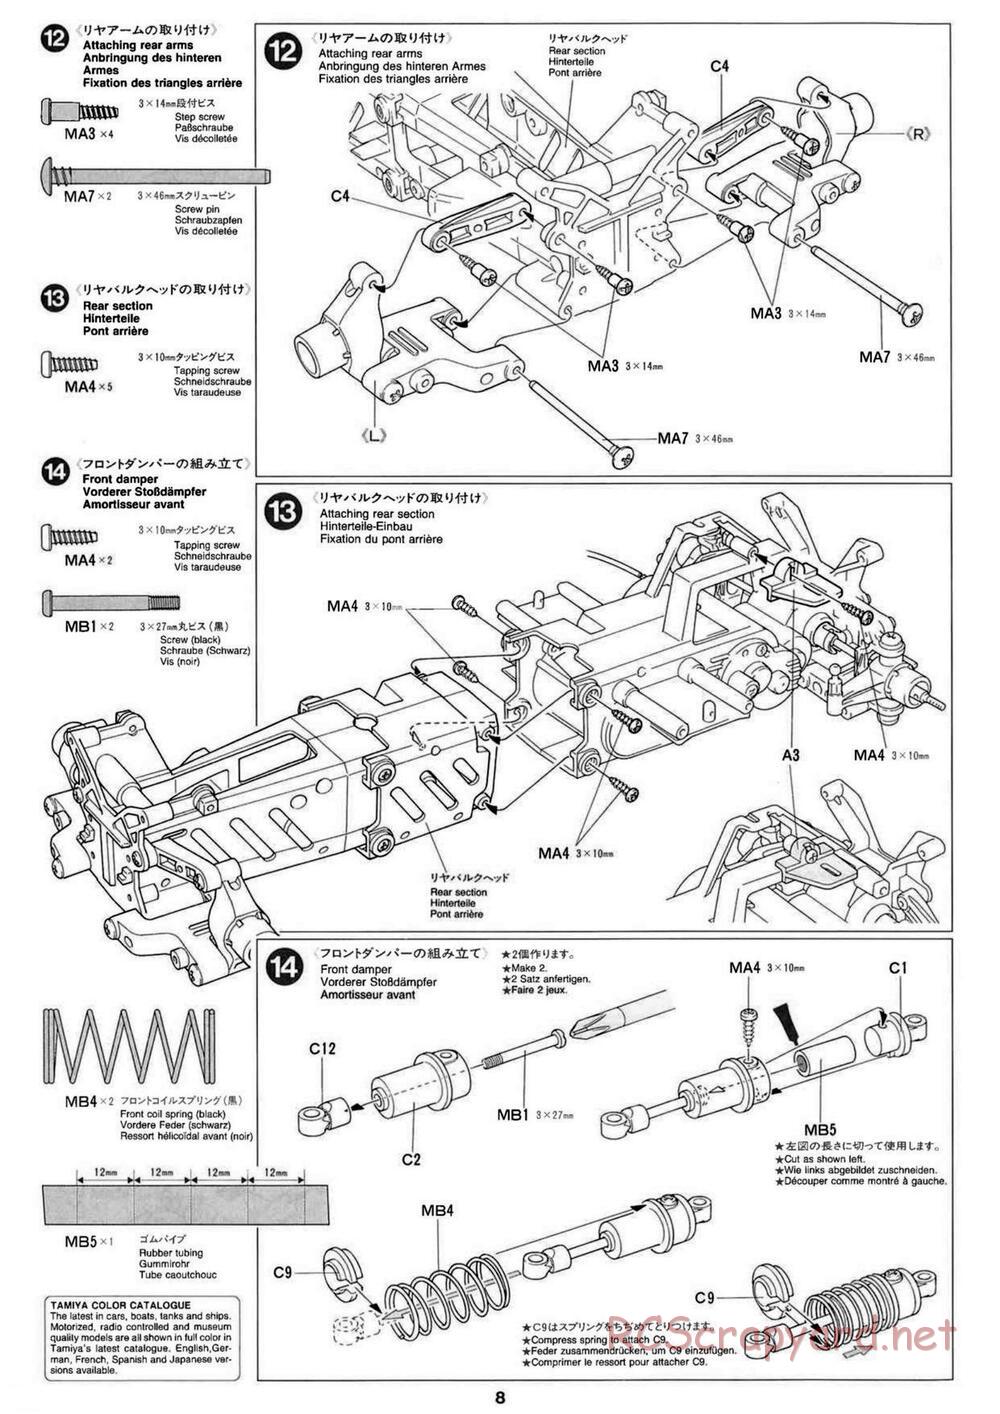 Tamiya - FF-02 Chassis - Manual - Page 8